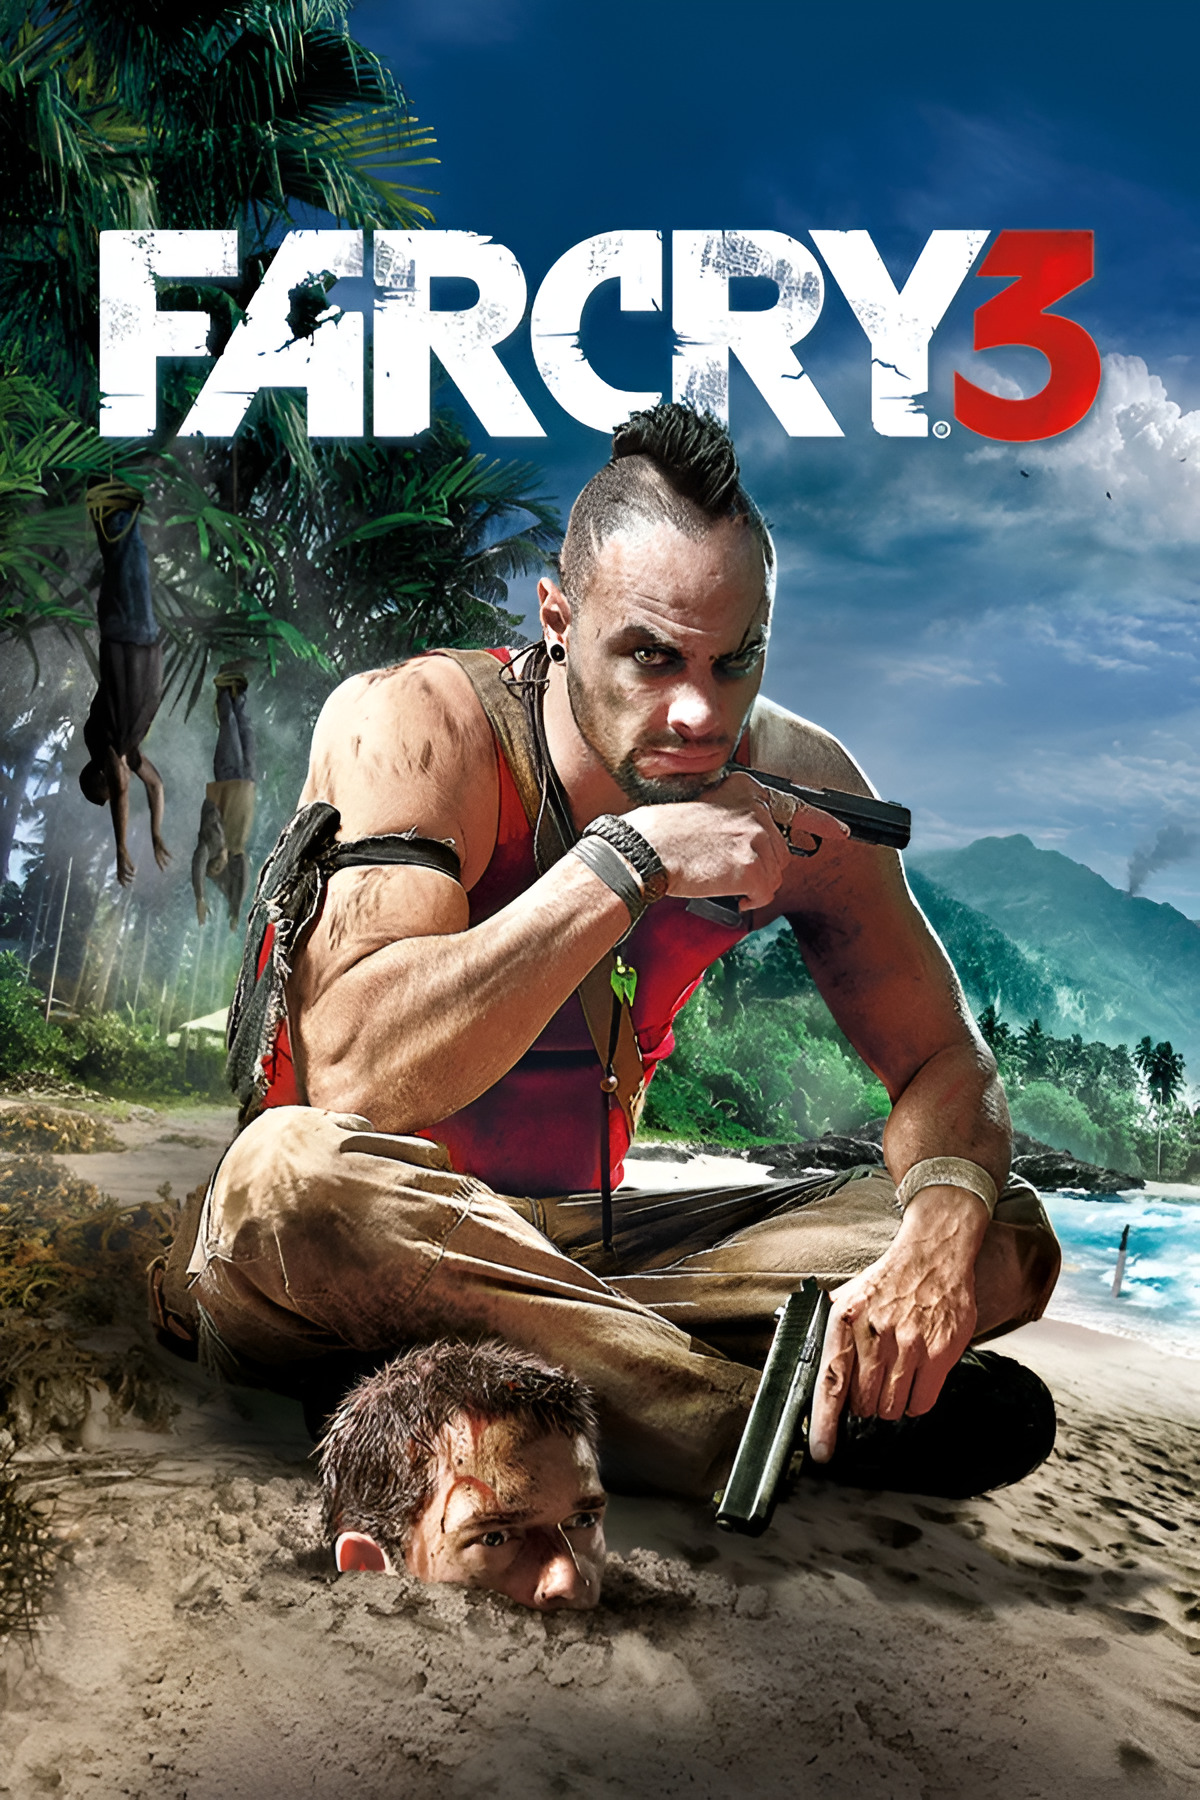 far cry 3 classic edition